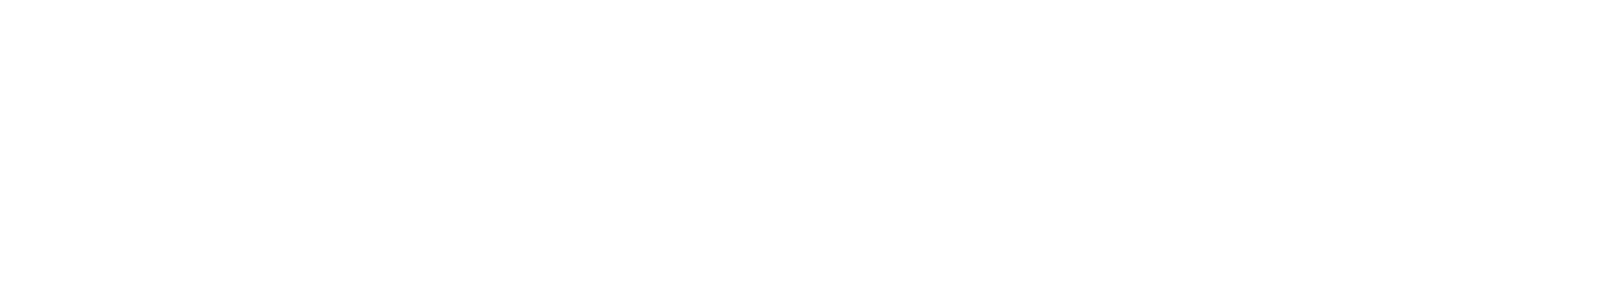 GÜBRETAŞ logo large for dark backgrounds (transparent PNG)